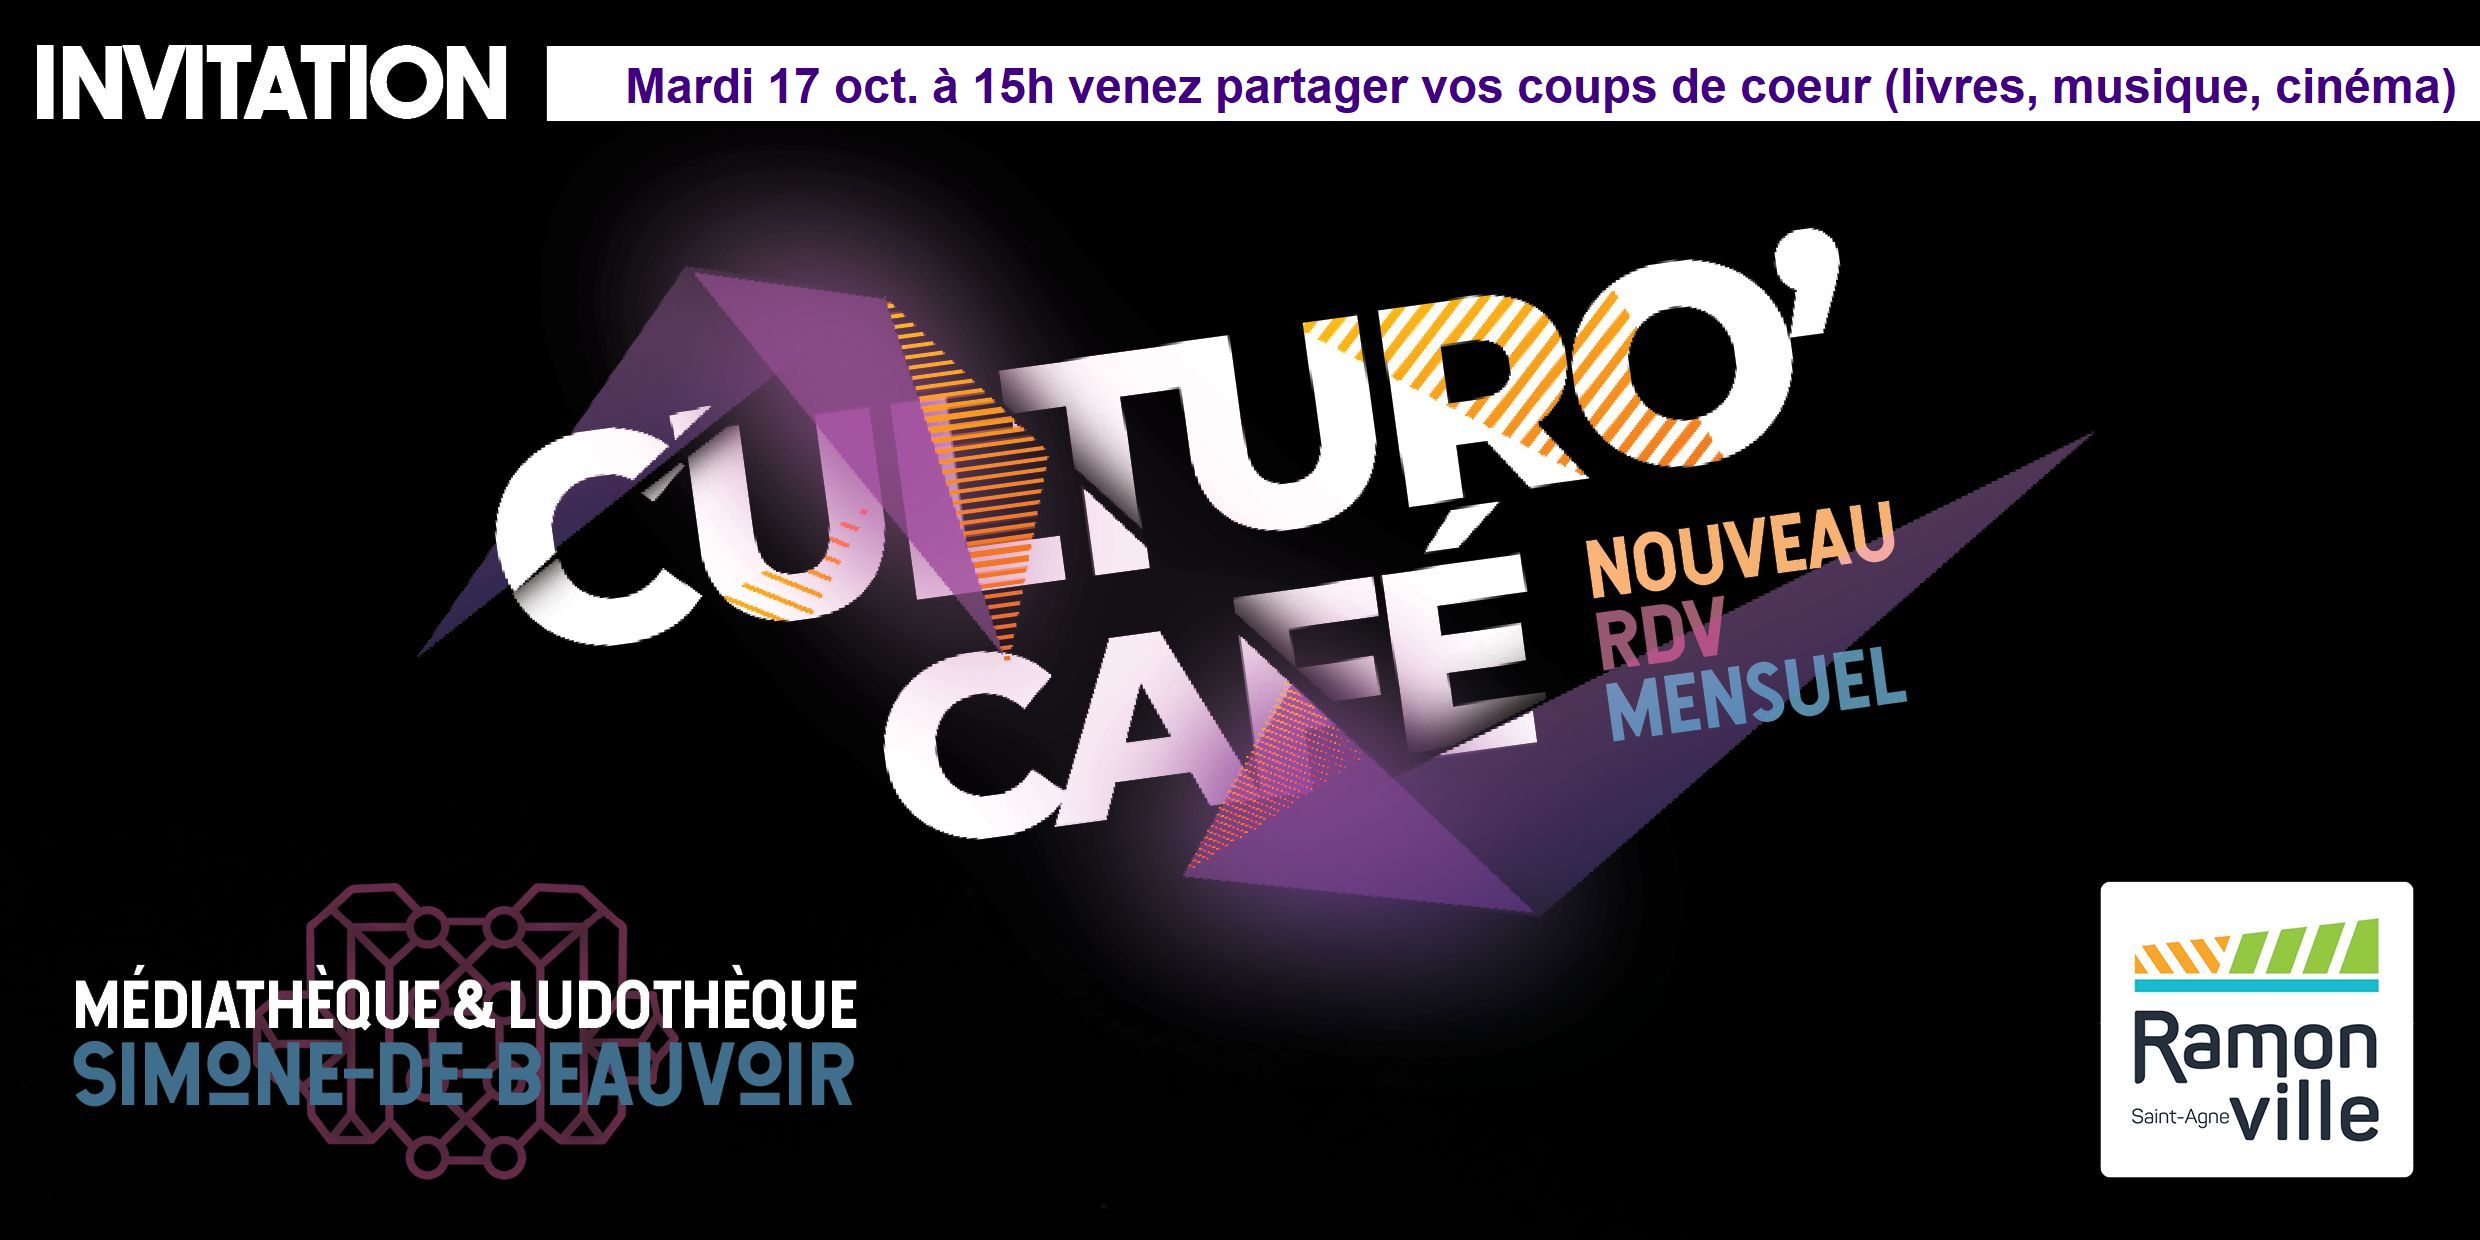 Invitation_Culturo_café_17-10-23.jpg